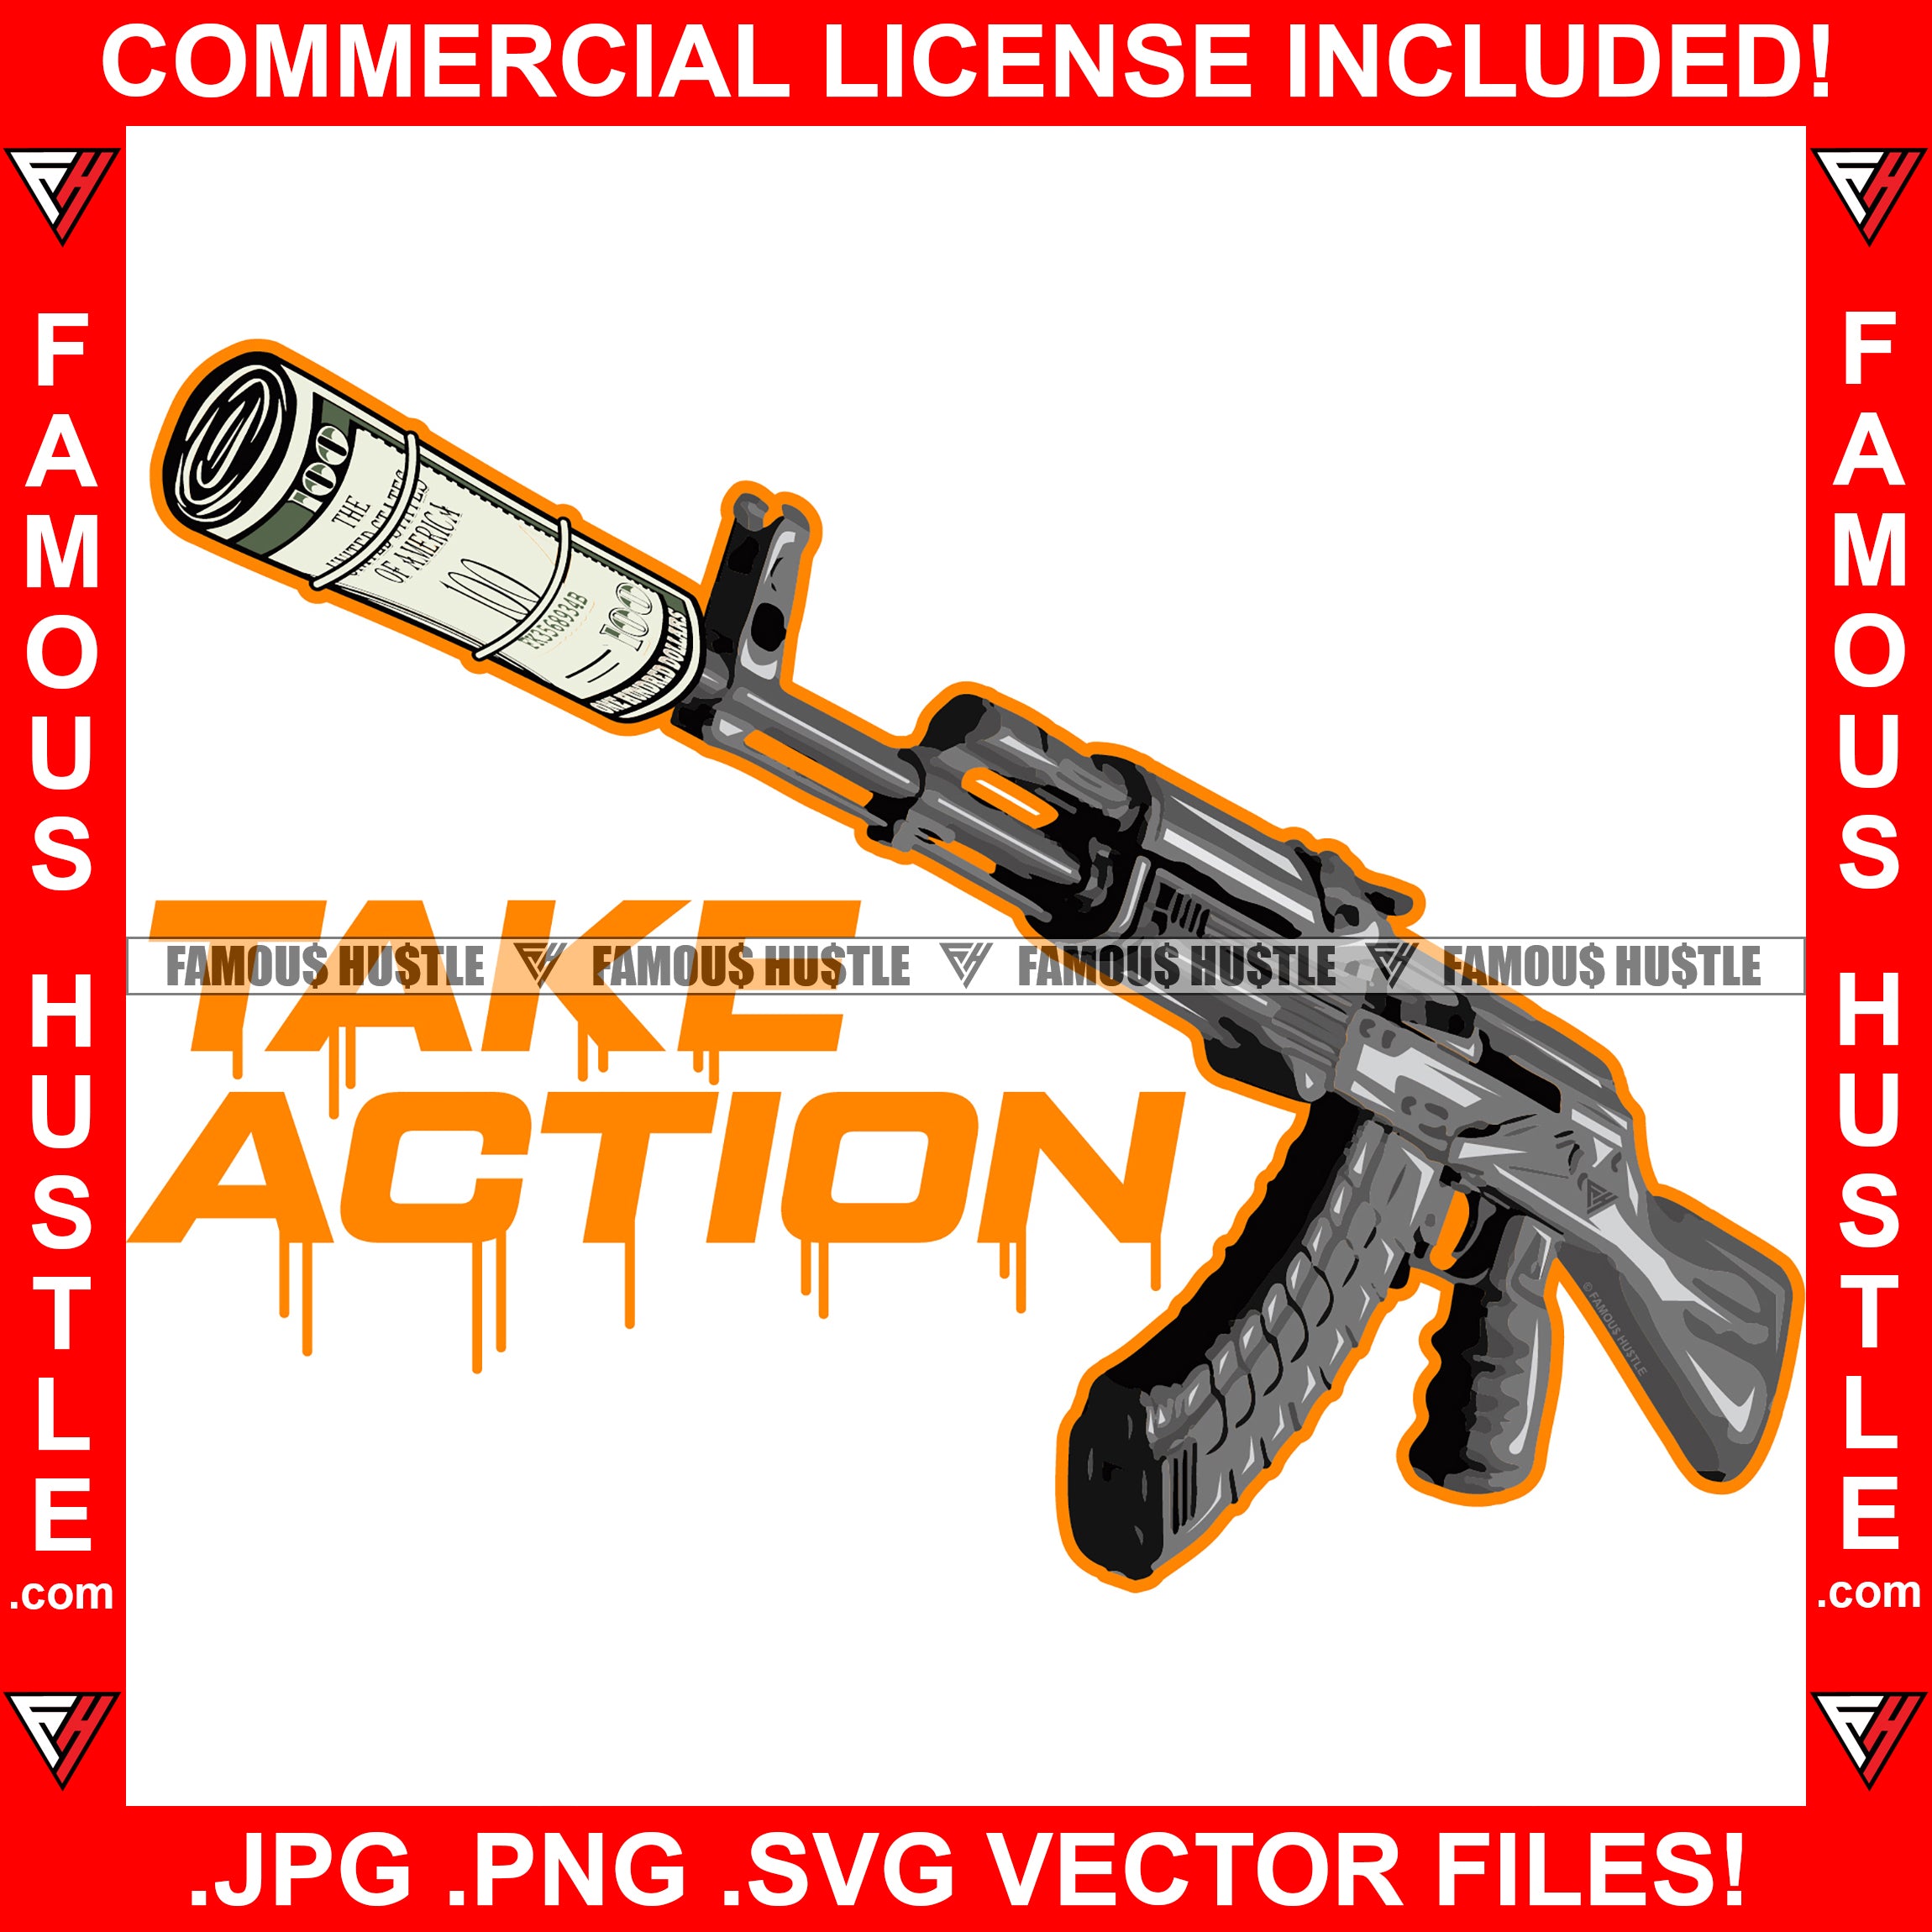 1400 Ak 47 Illustrations RoyaltyFree Vector Graphics  Clip Art   iStock  Ak 47 vector Ak 47 isolated